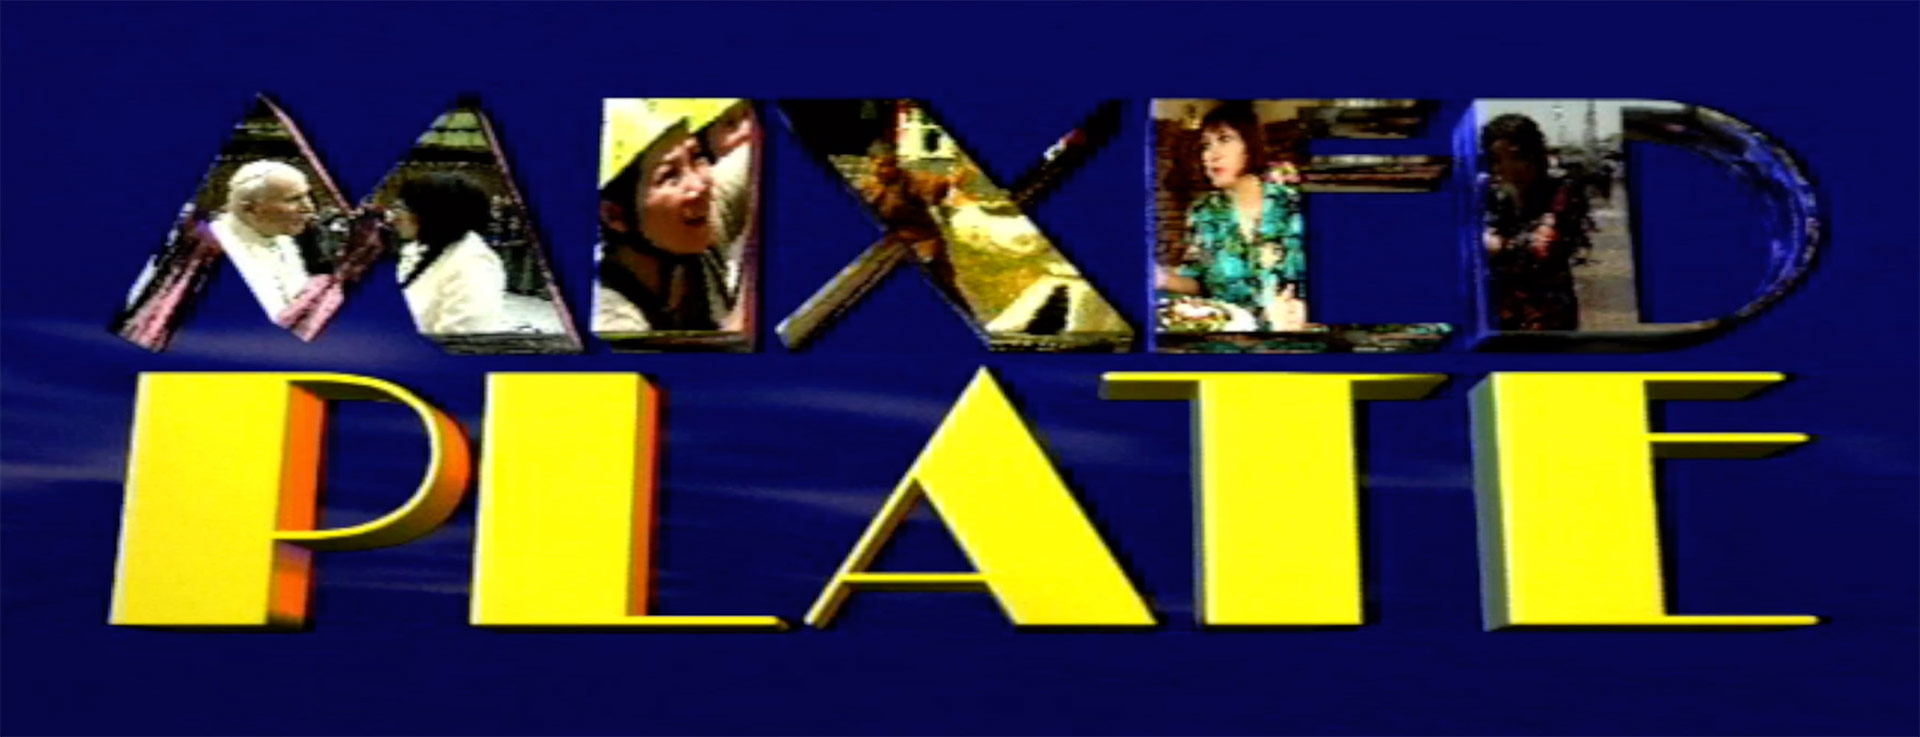 Mixed Plate TV Logo